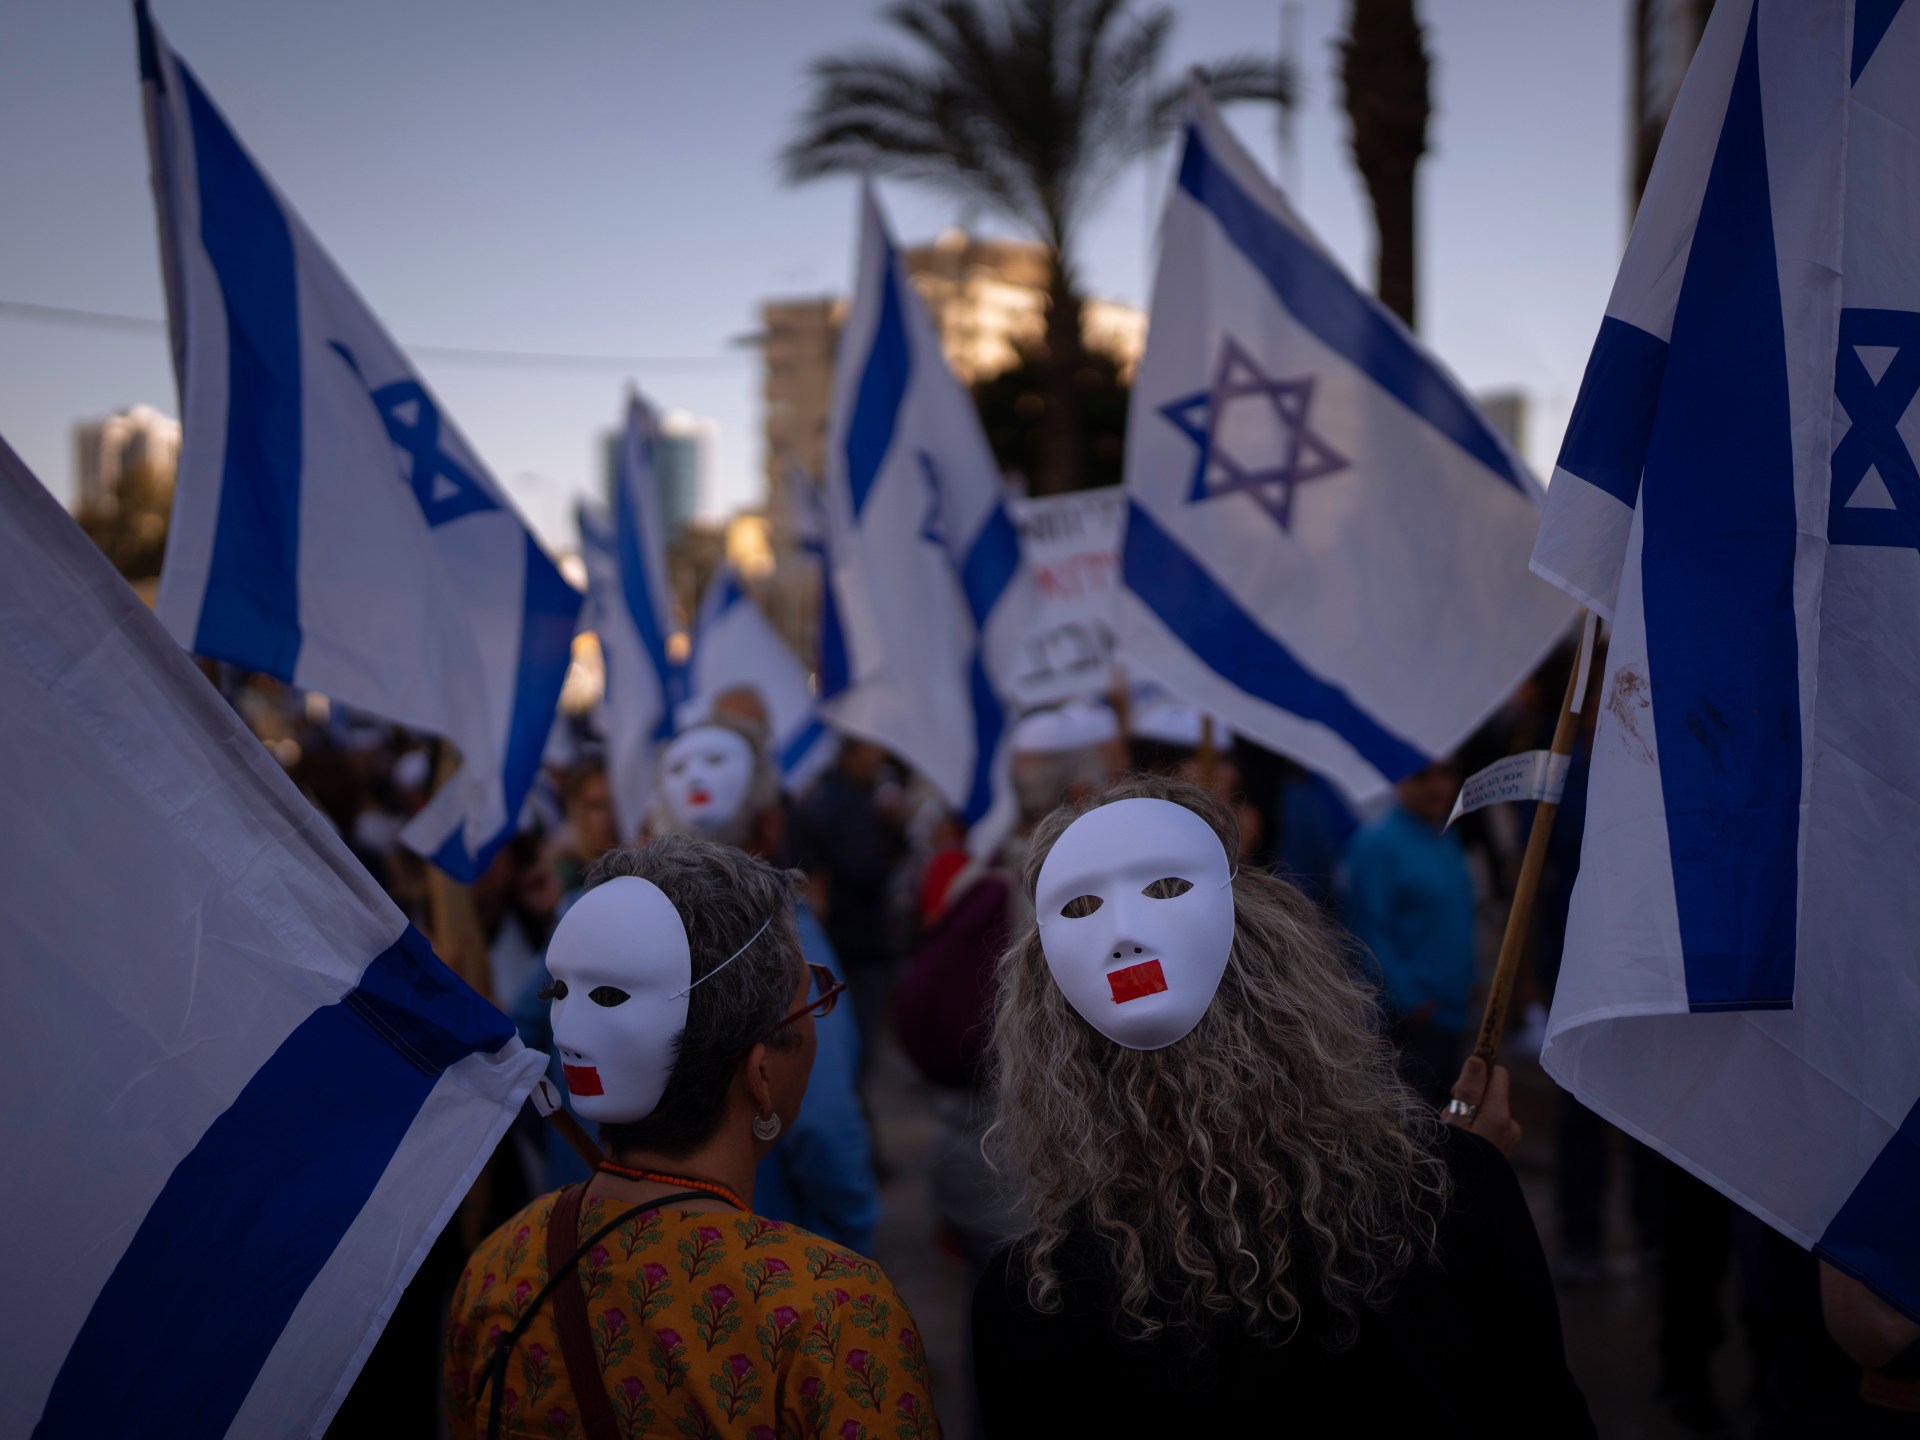 Masa depan yang mana bagi Israel: kacau, bencana atau konstruktif?  |  Benyamin Netanyahu